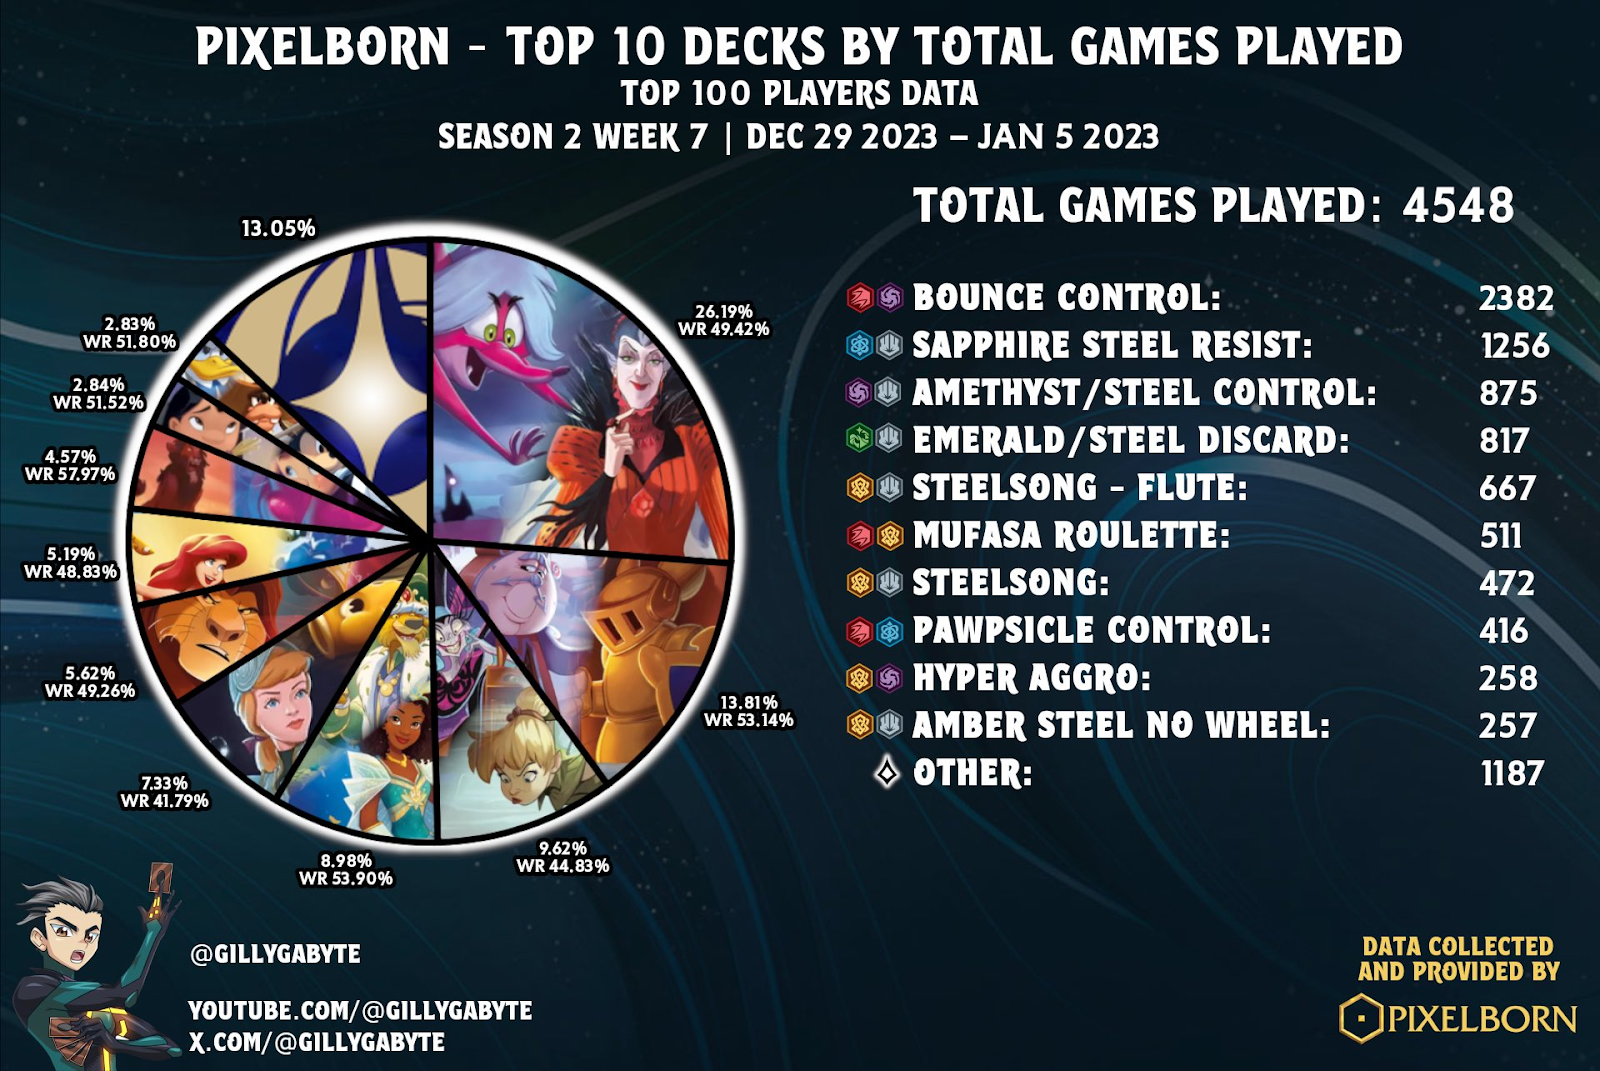 Pixelborn - Top 10 Decks by Total Games Played - Dec 29 to Jan 5